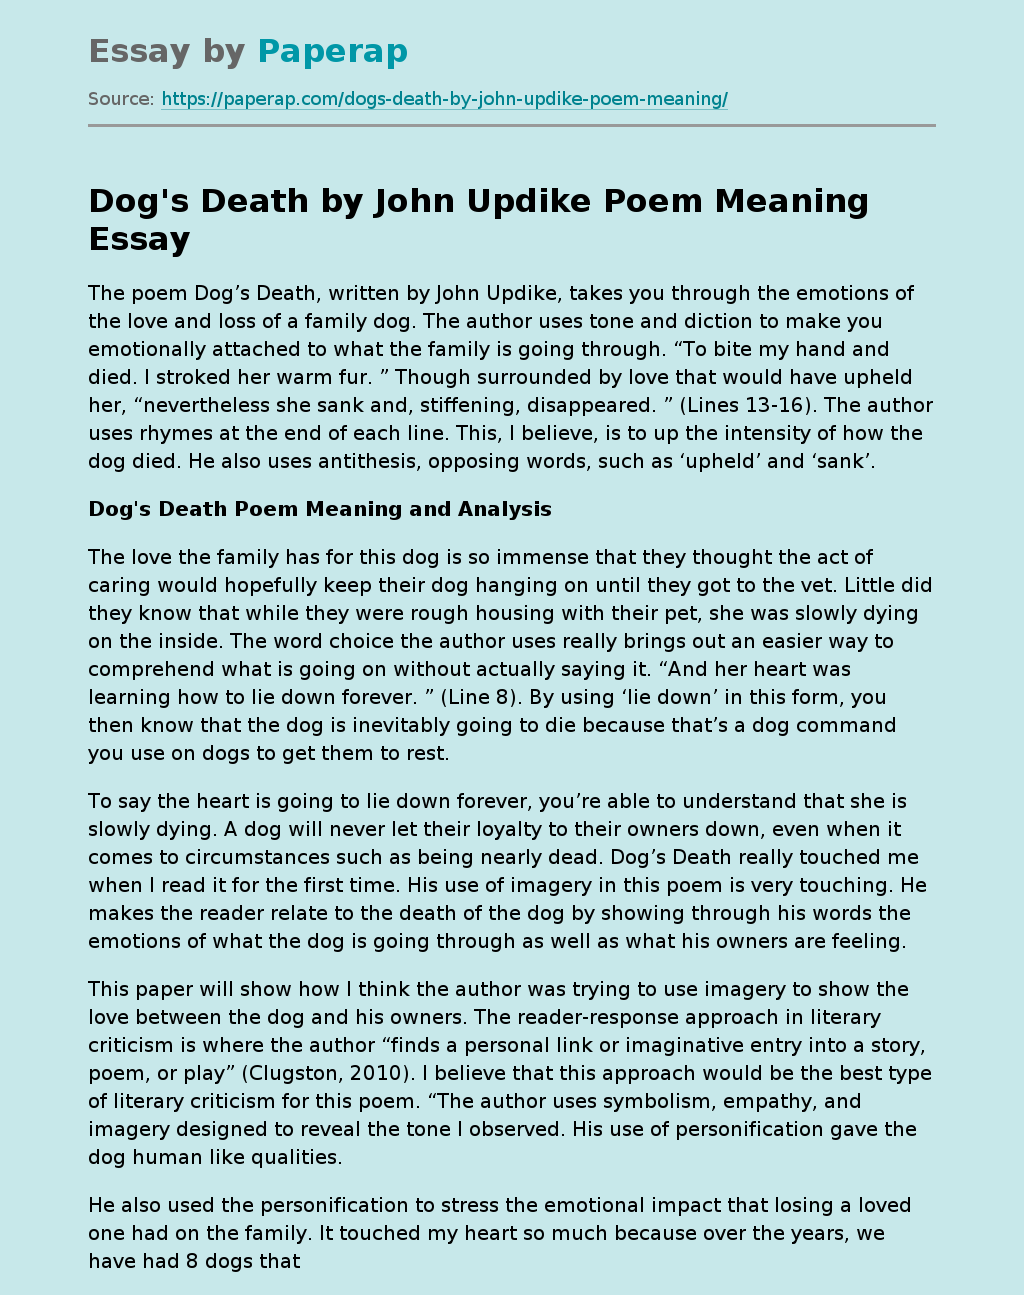 Dog's Death by John Updike Poem Meaning